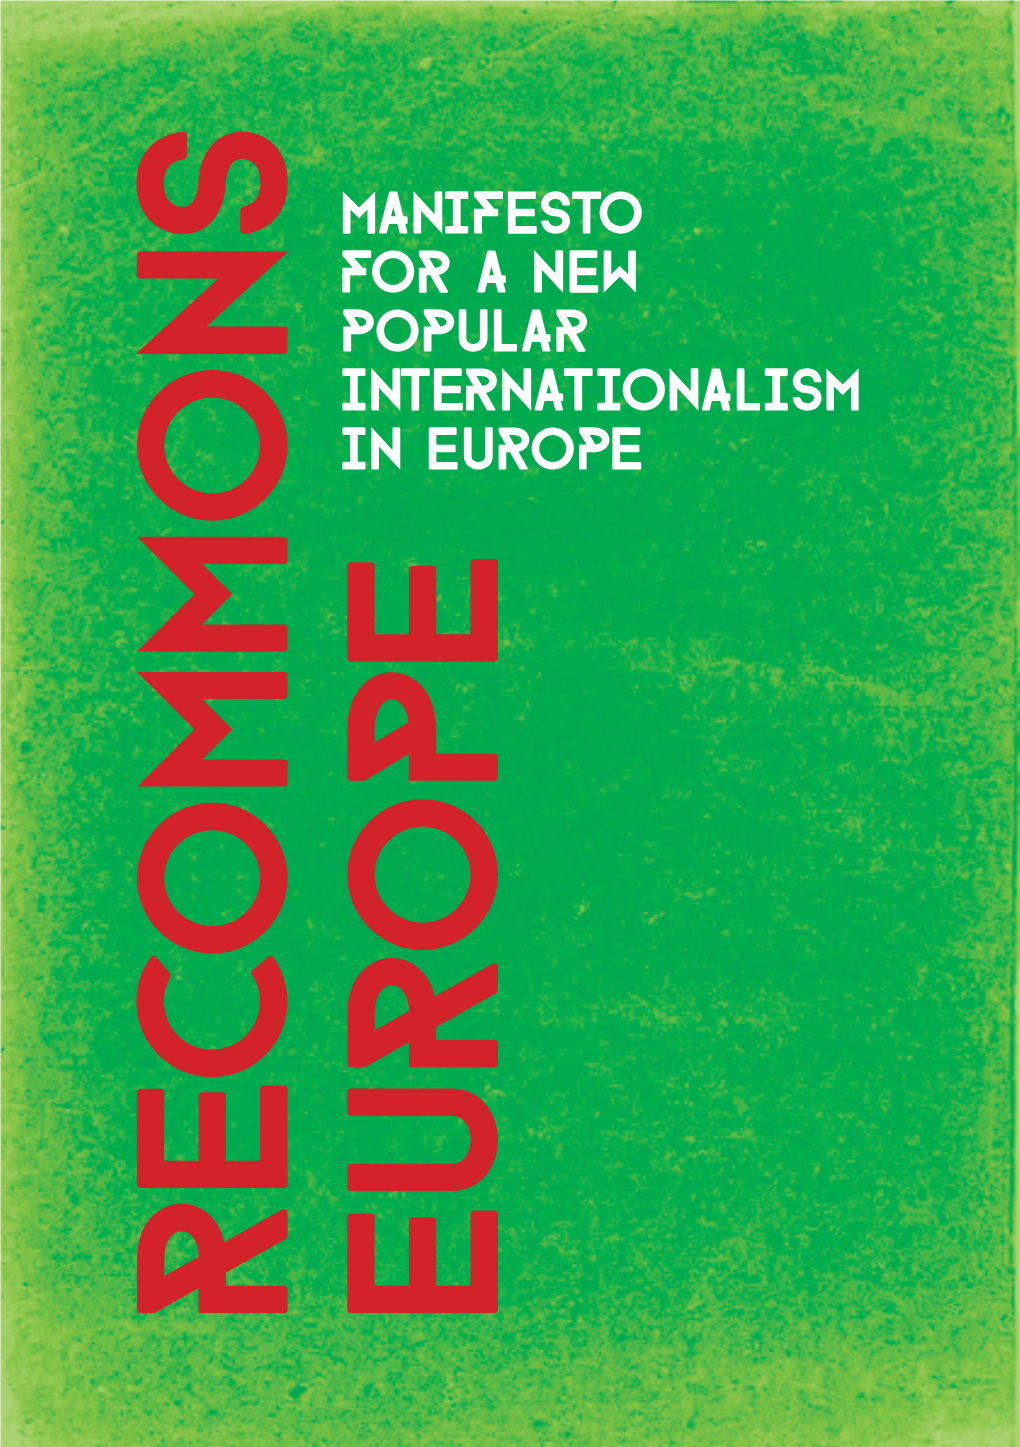 Manifesto for a New Popular Internationalism in Europe